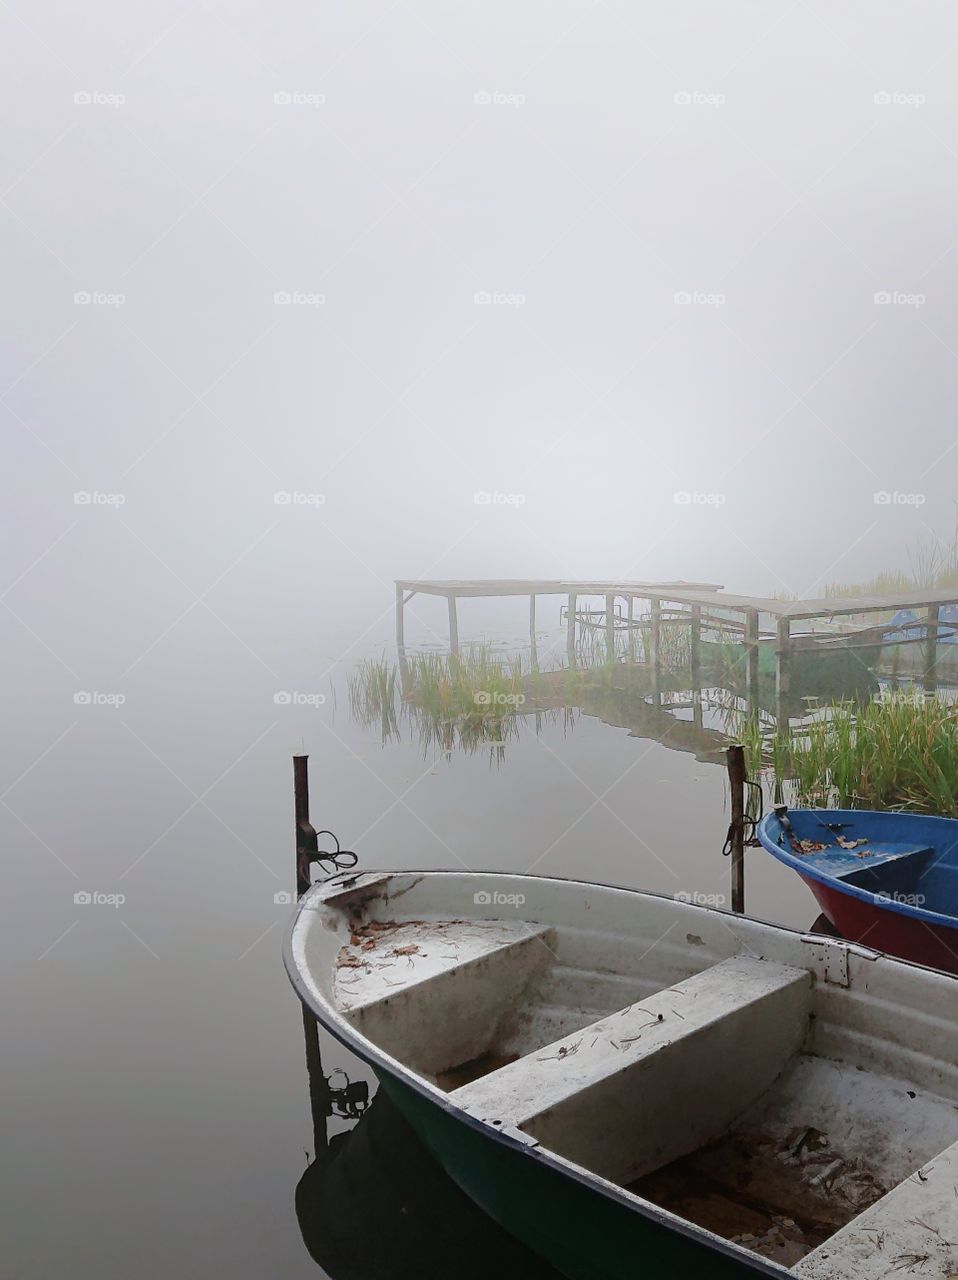 Morning fog on the lake